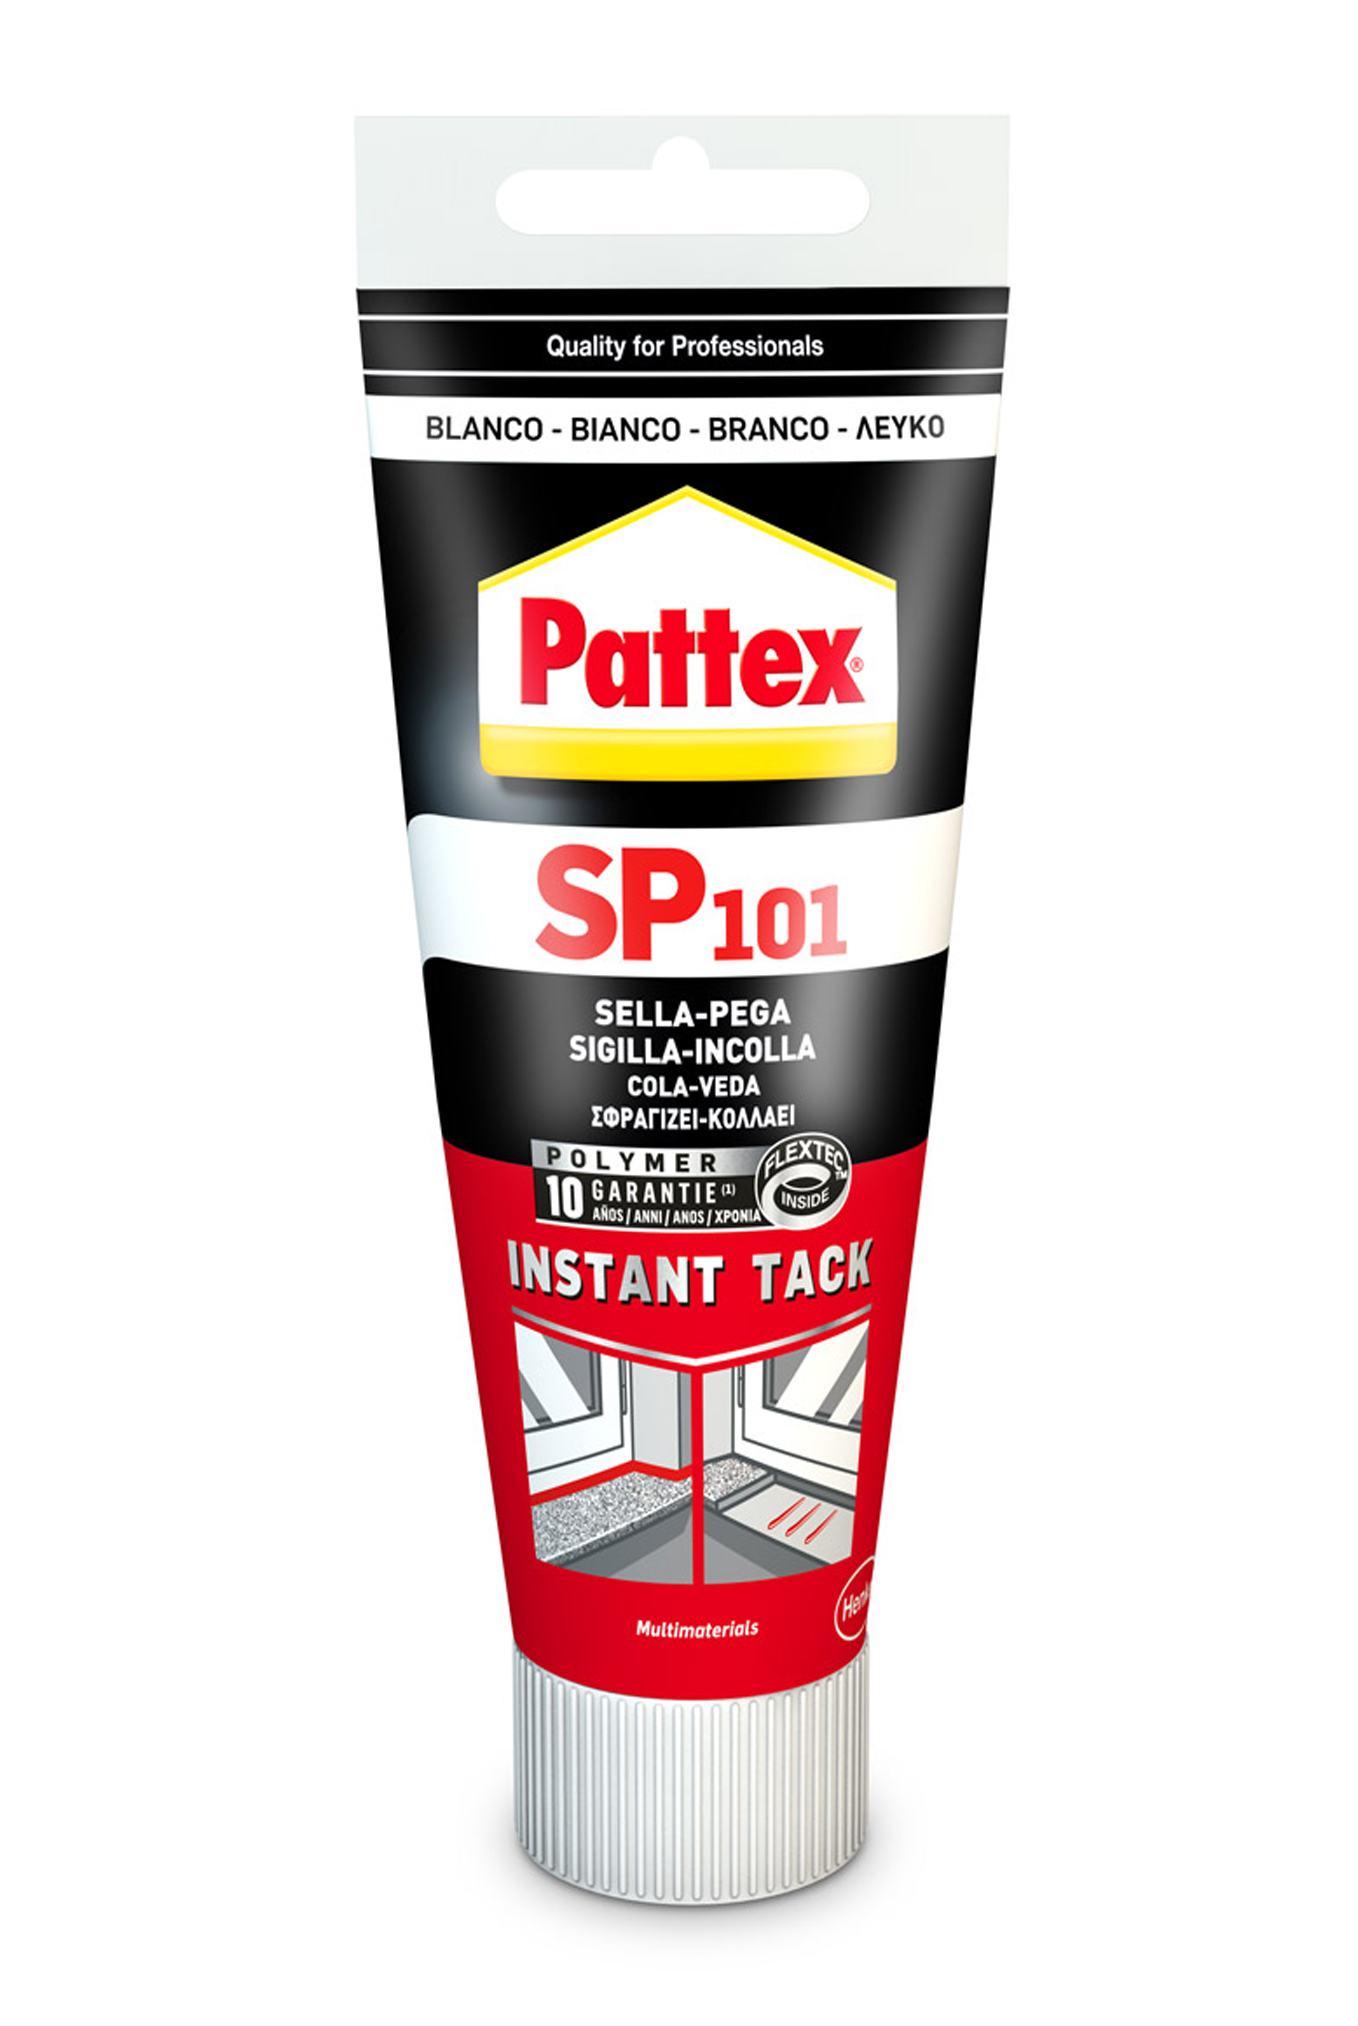 Pattex sp101 instant tack 80ml